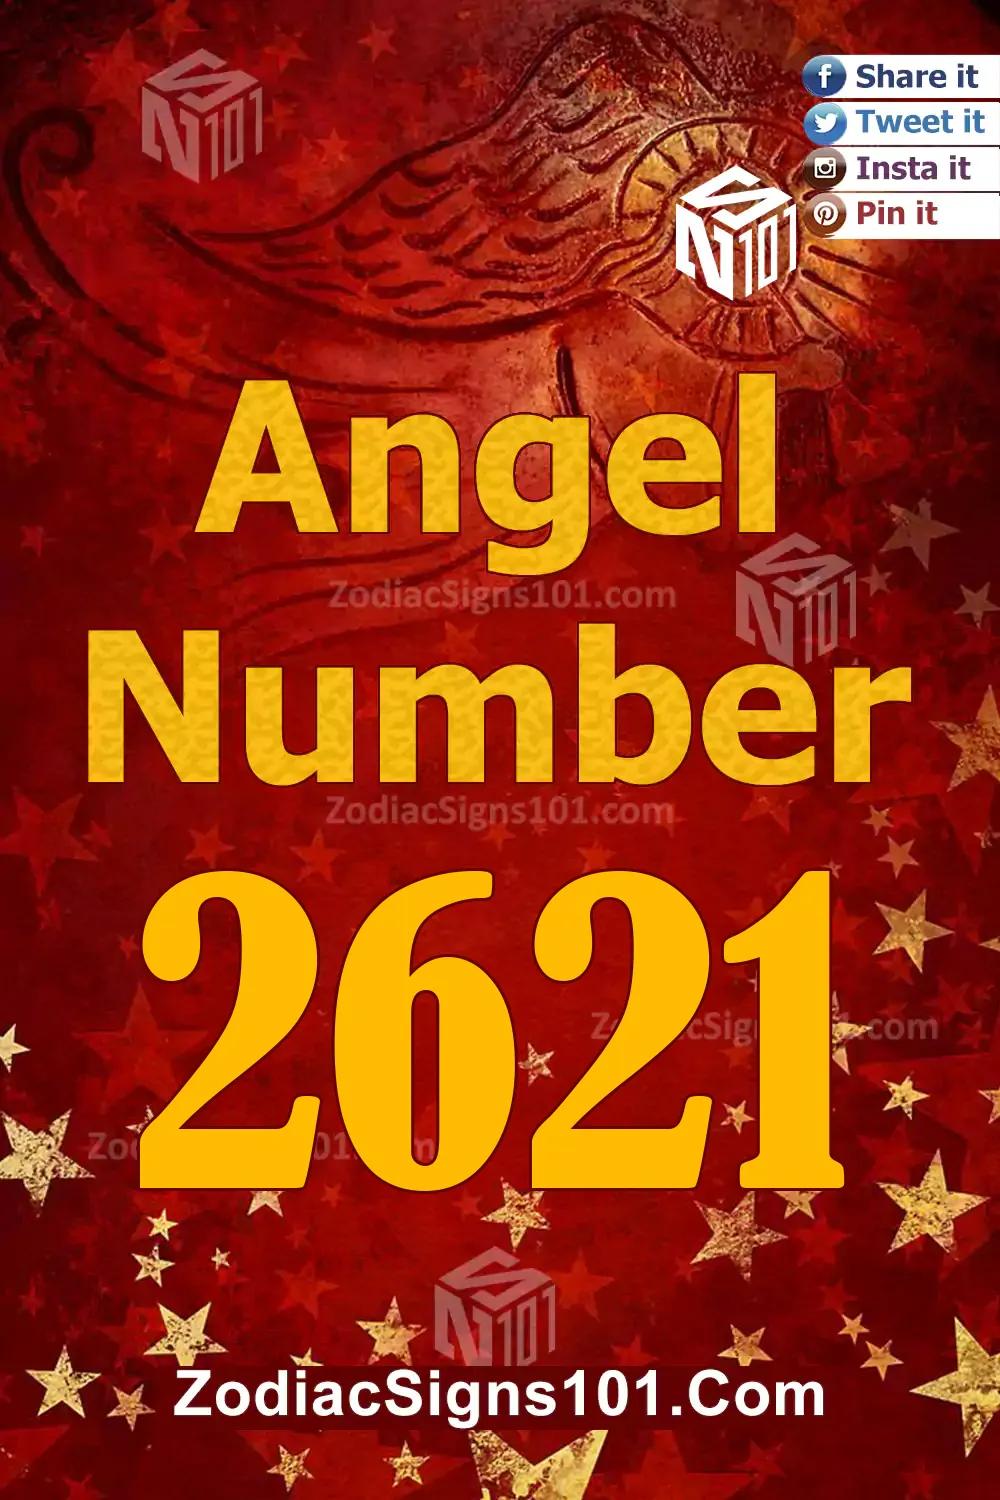 2621-Angel-Number-Meaning.jpg